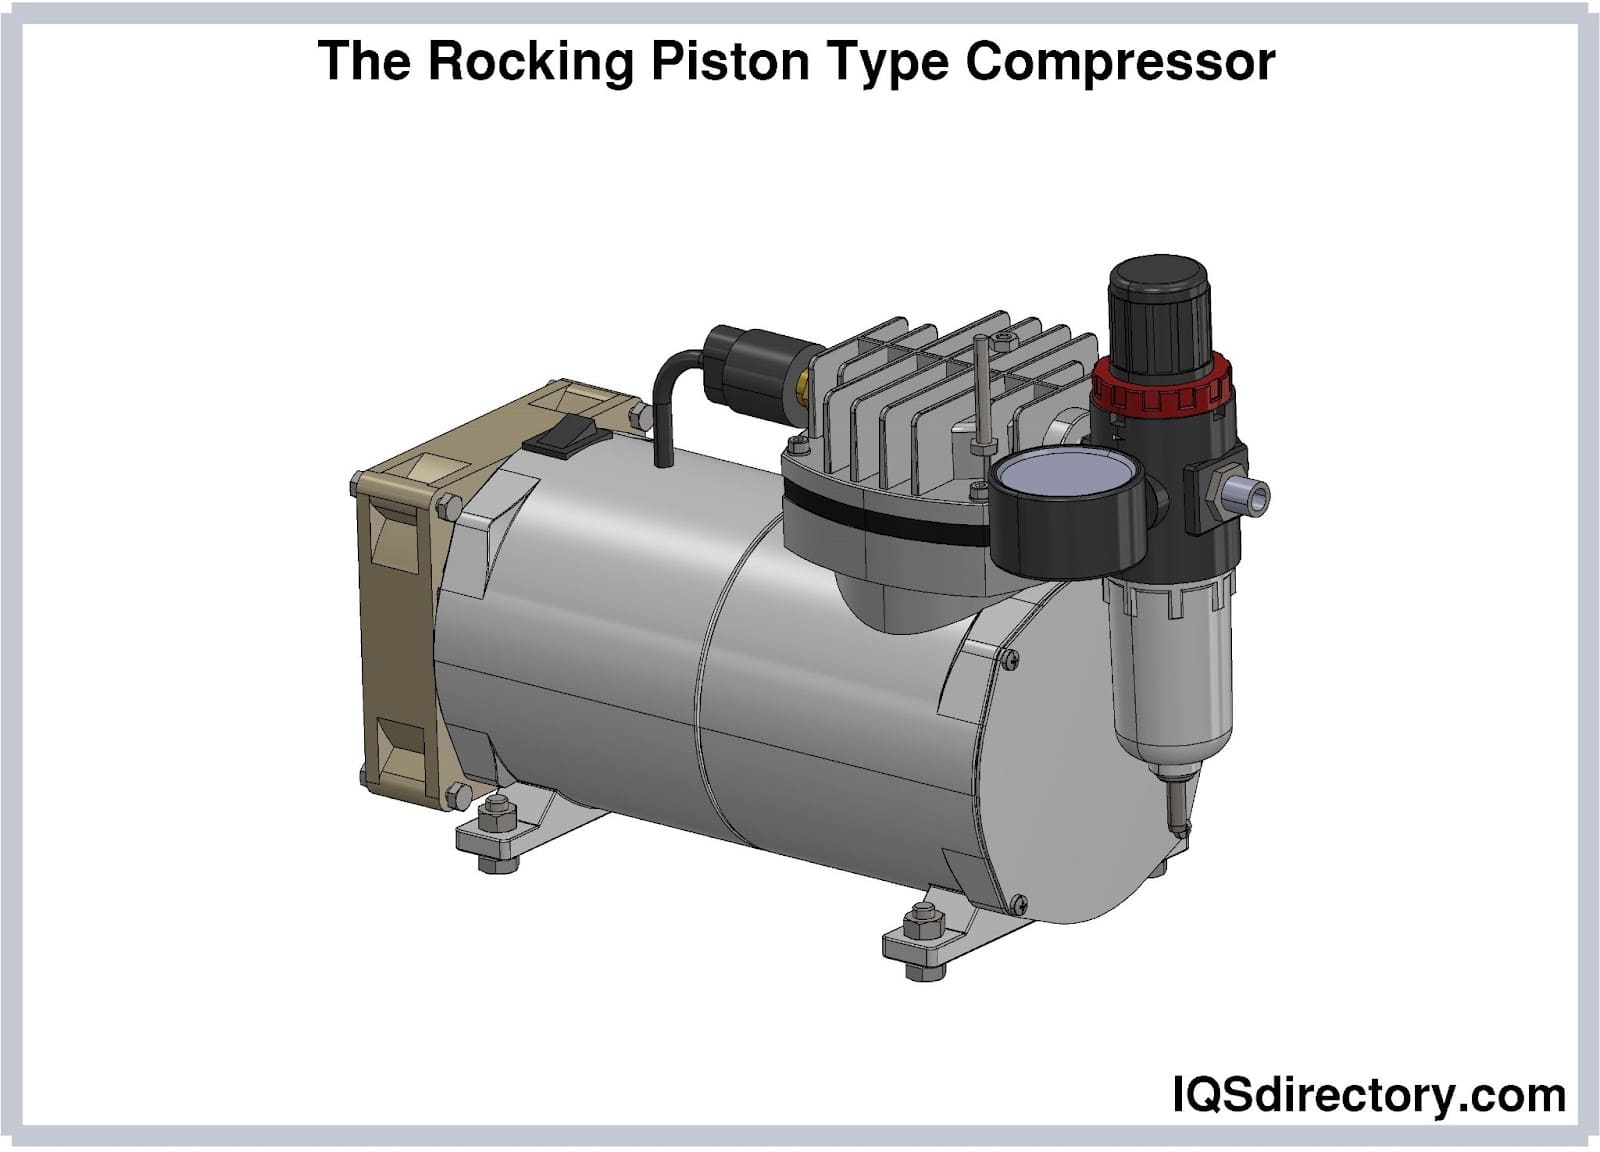 The Rocking Piston Type Compressor